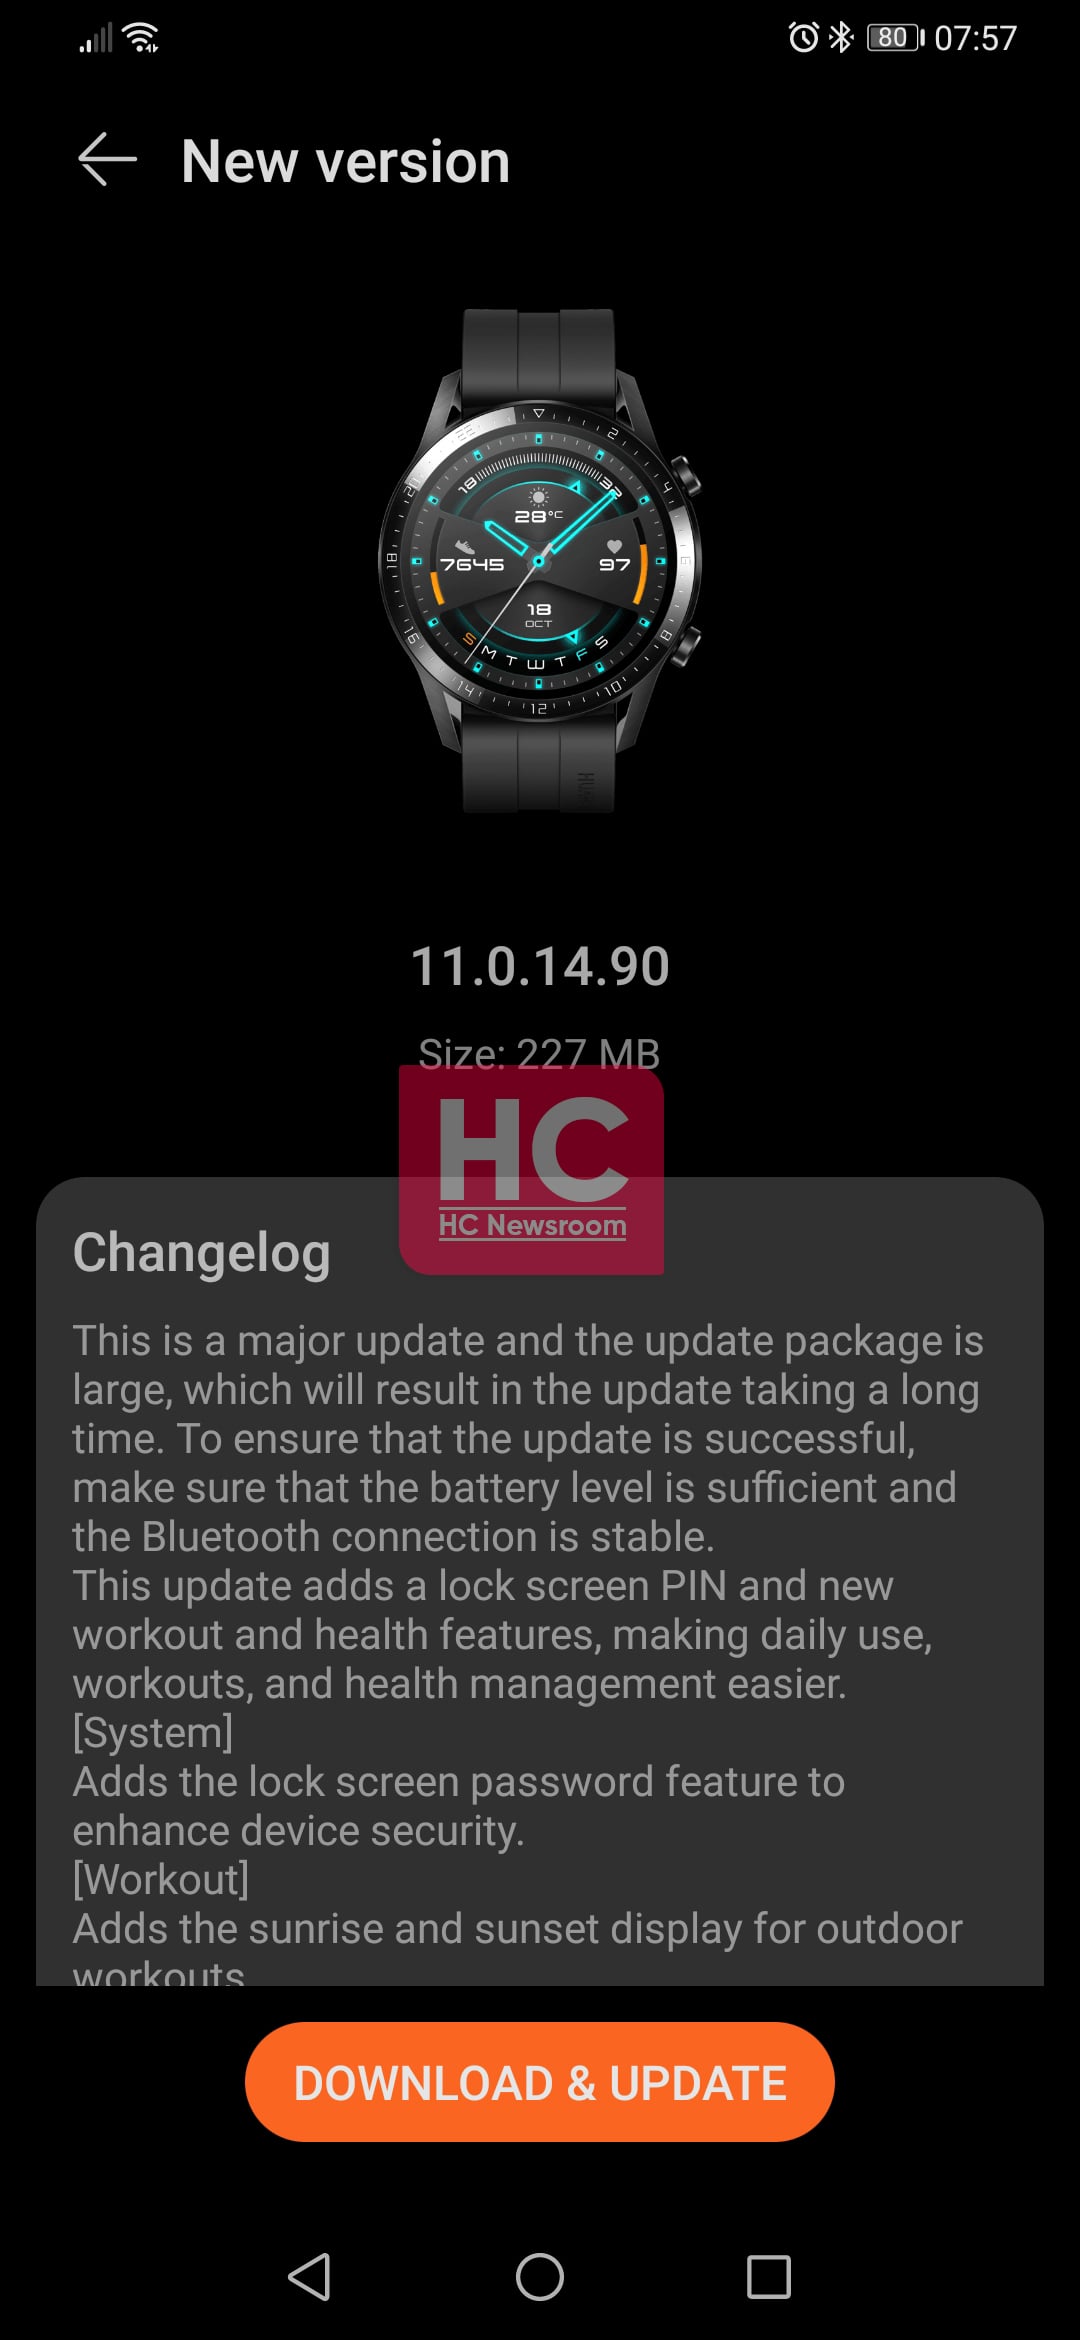 Huawei Watch GT 2 Major update uk